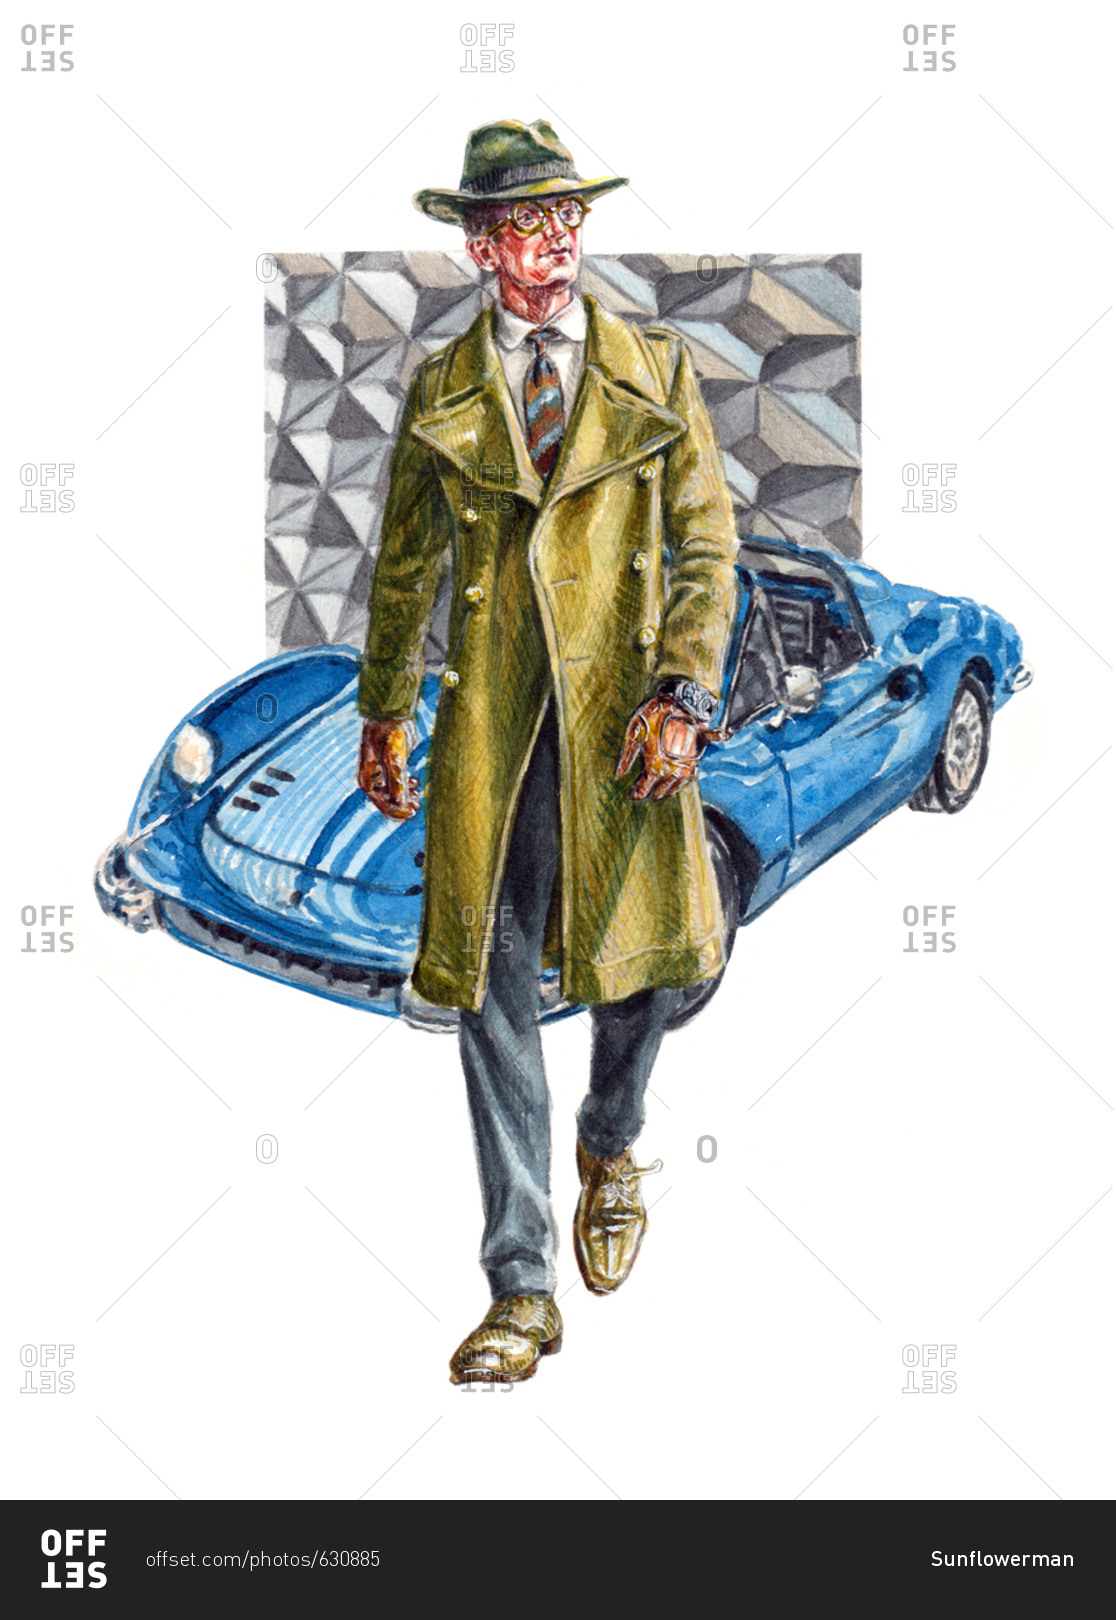 Dapper man walking with luxury car in background